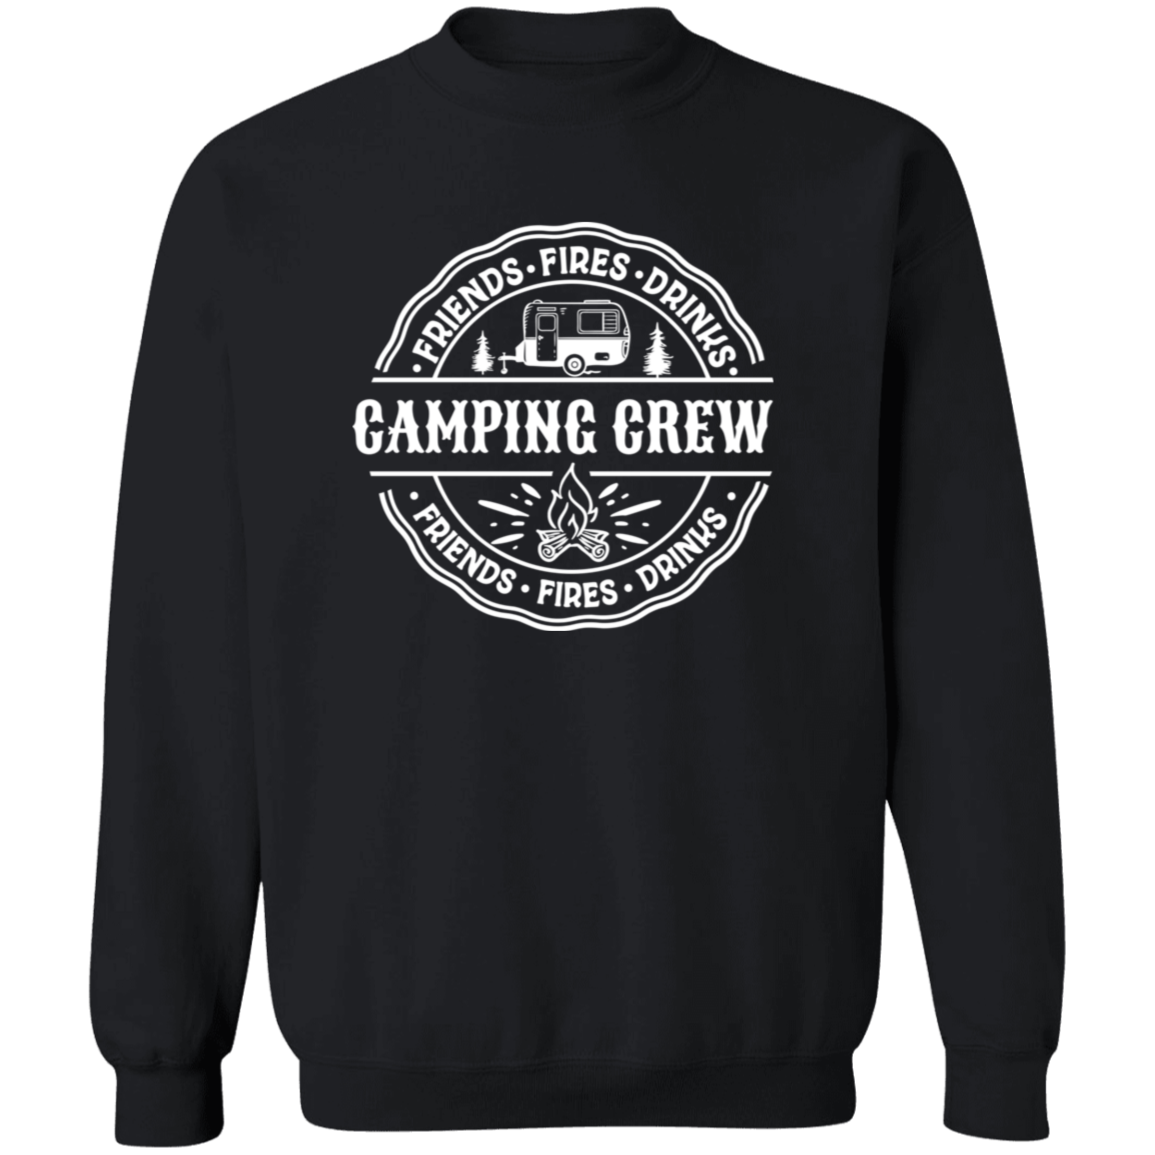 Camping Crew W G180 Crewneck Pullover Sweatshirt